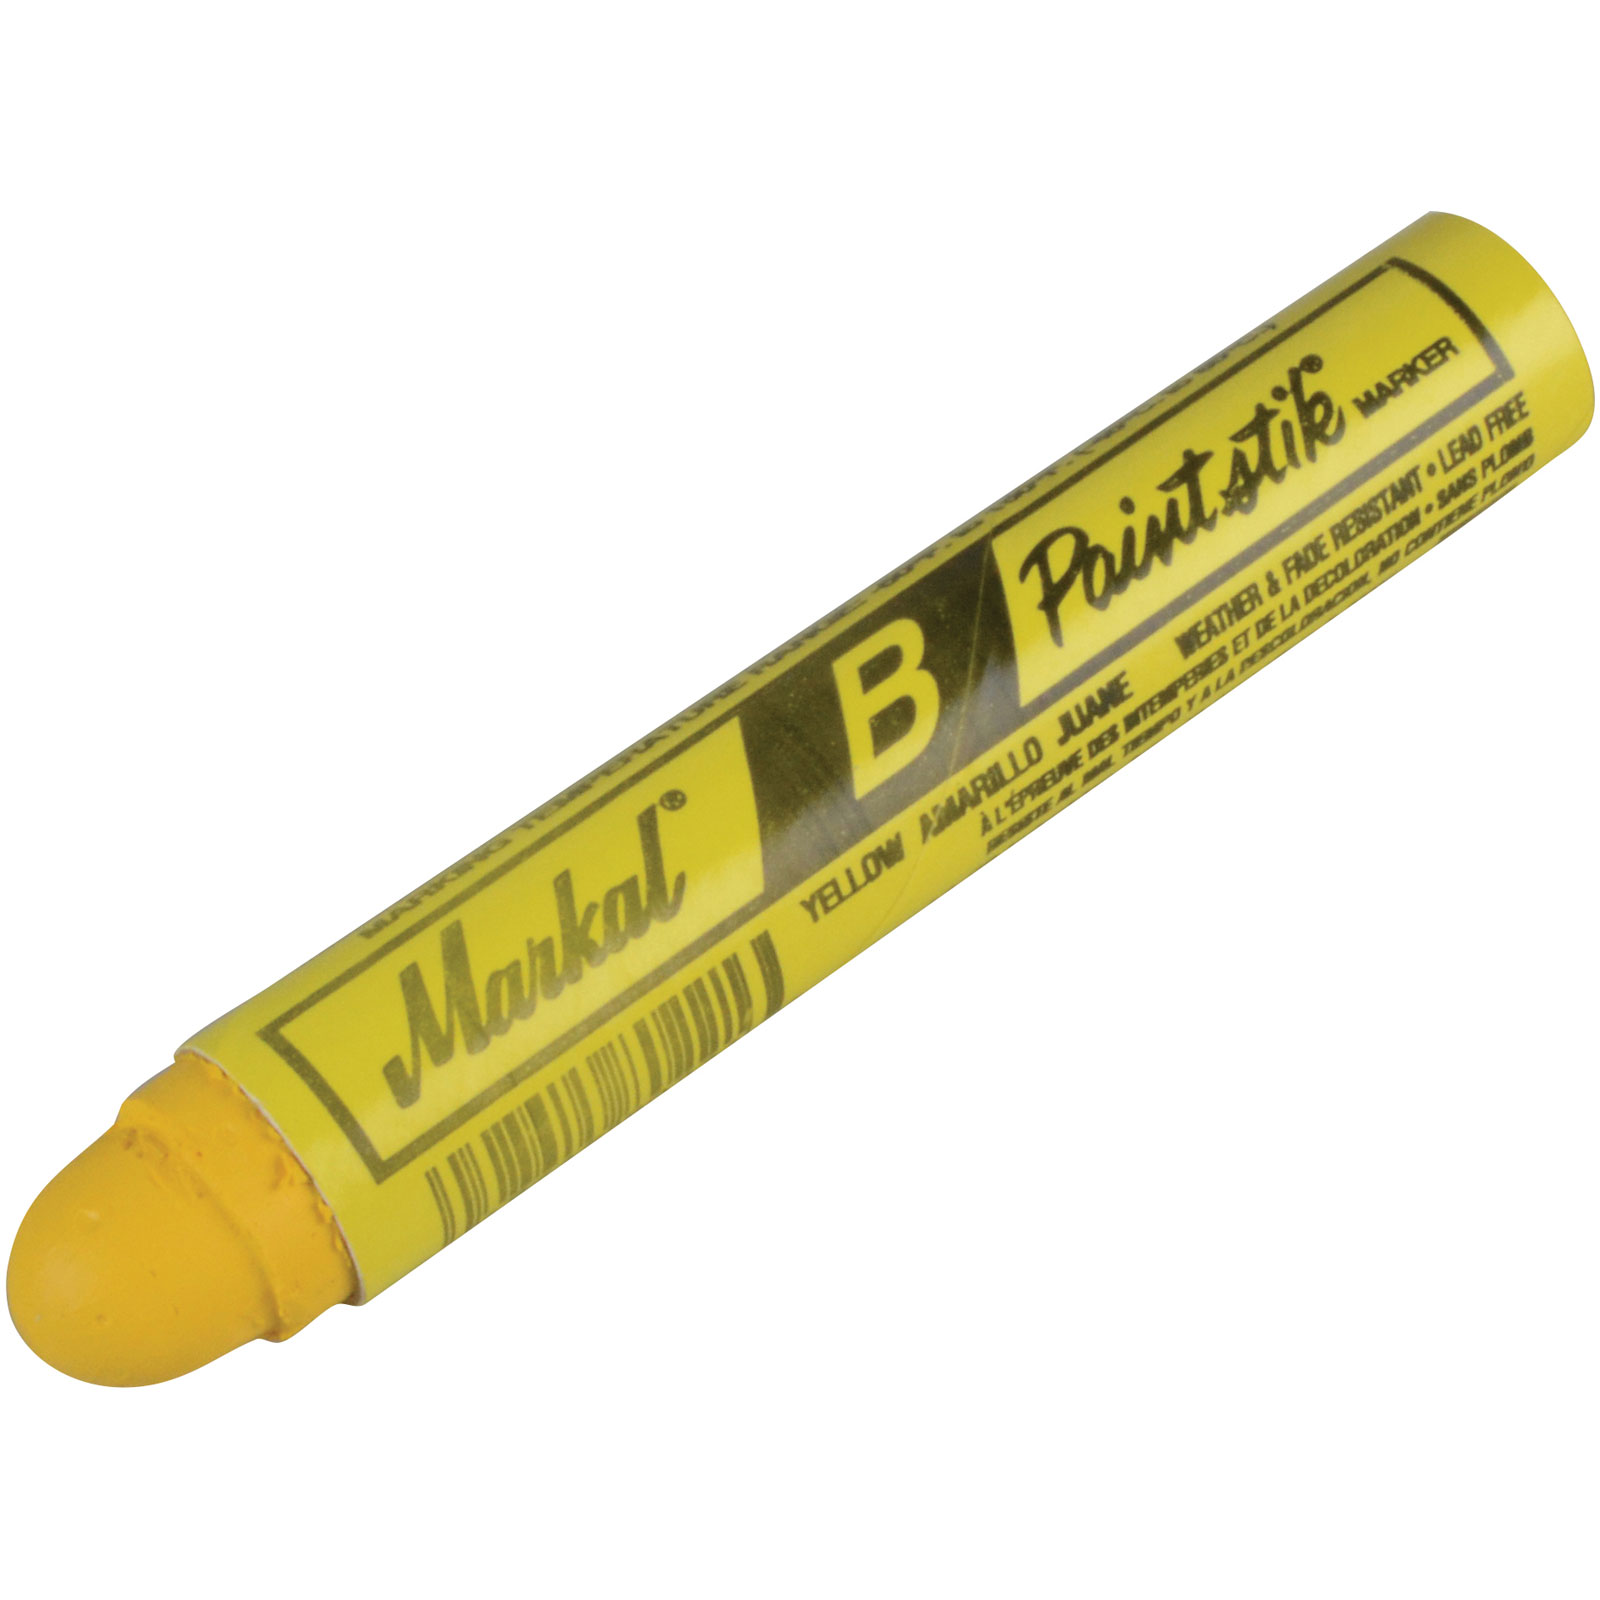 Markal 80421 Yellow B3/8 Paint St Marker